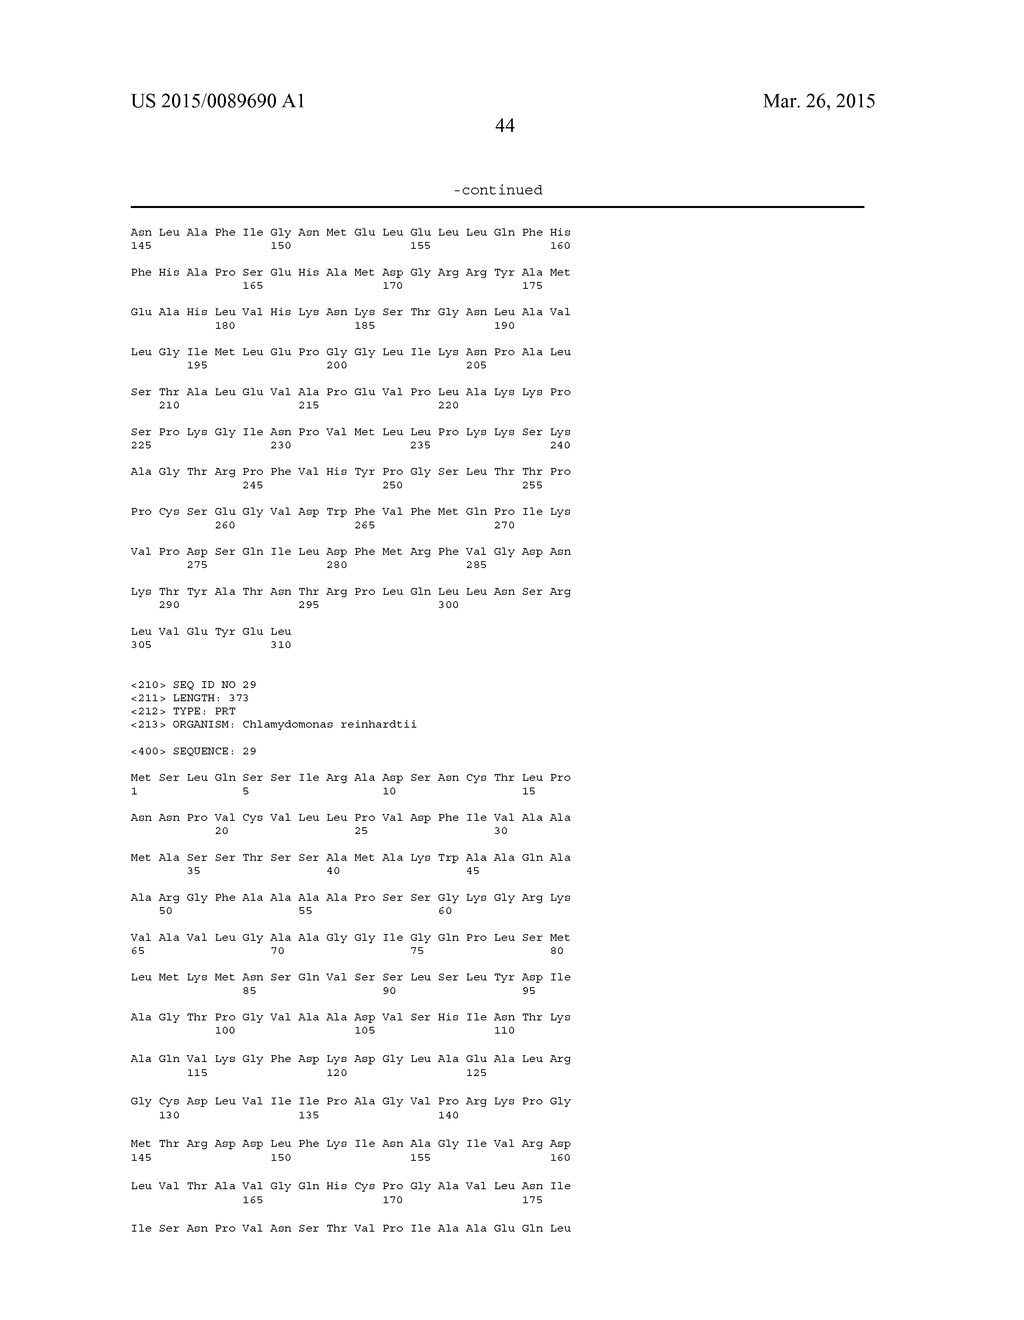 SODIUM HYPOCHLORITE RESISTANT GENES - diagram, schematic, and image 90